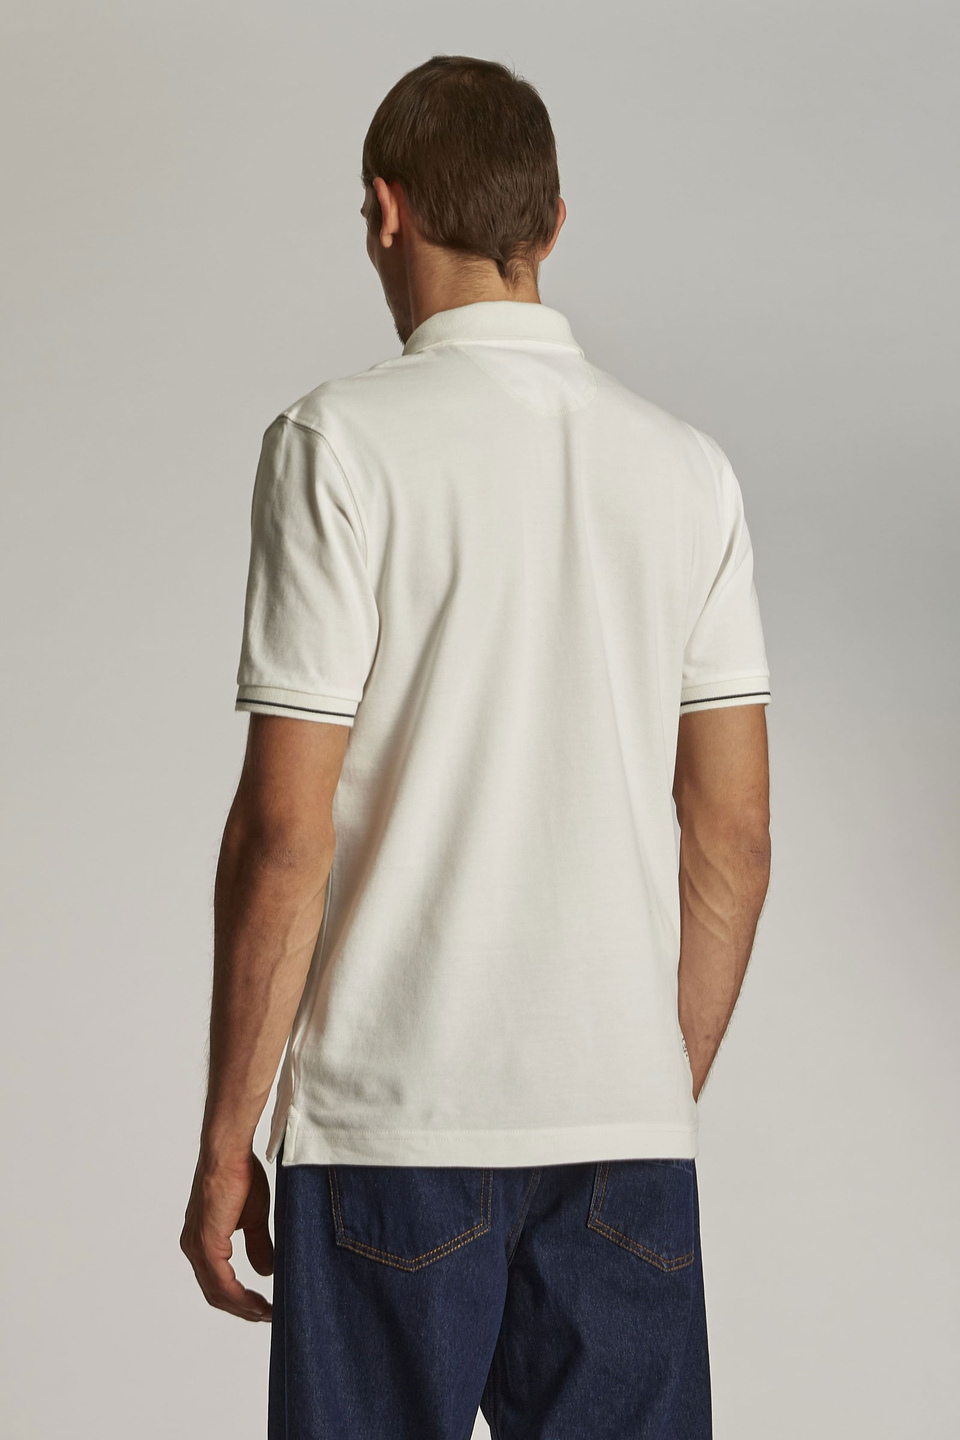 Men's plain-coloured short-sleeved, regular-fit polo shirt - La Martina - Official Online Shop